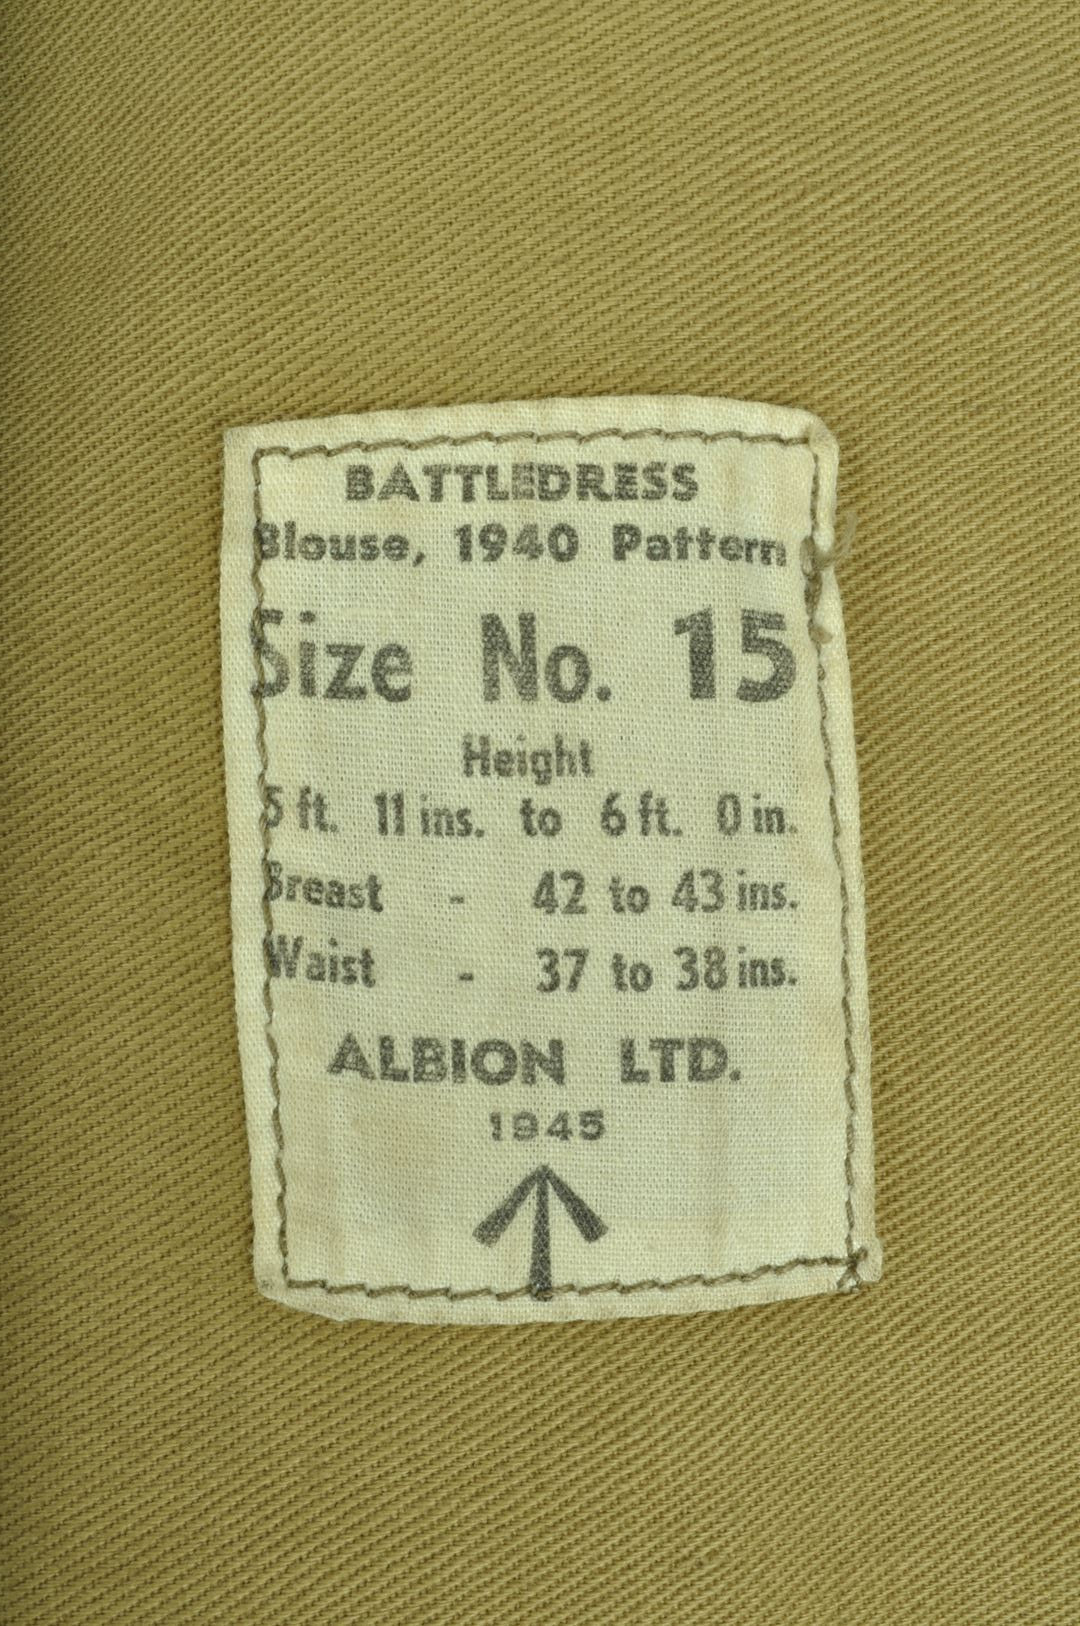 Blouson Battle Dress pattern 40 "Royal Armoured Corps "